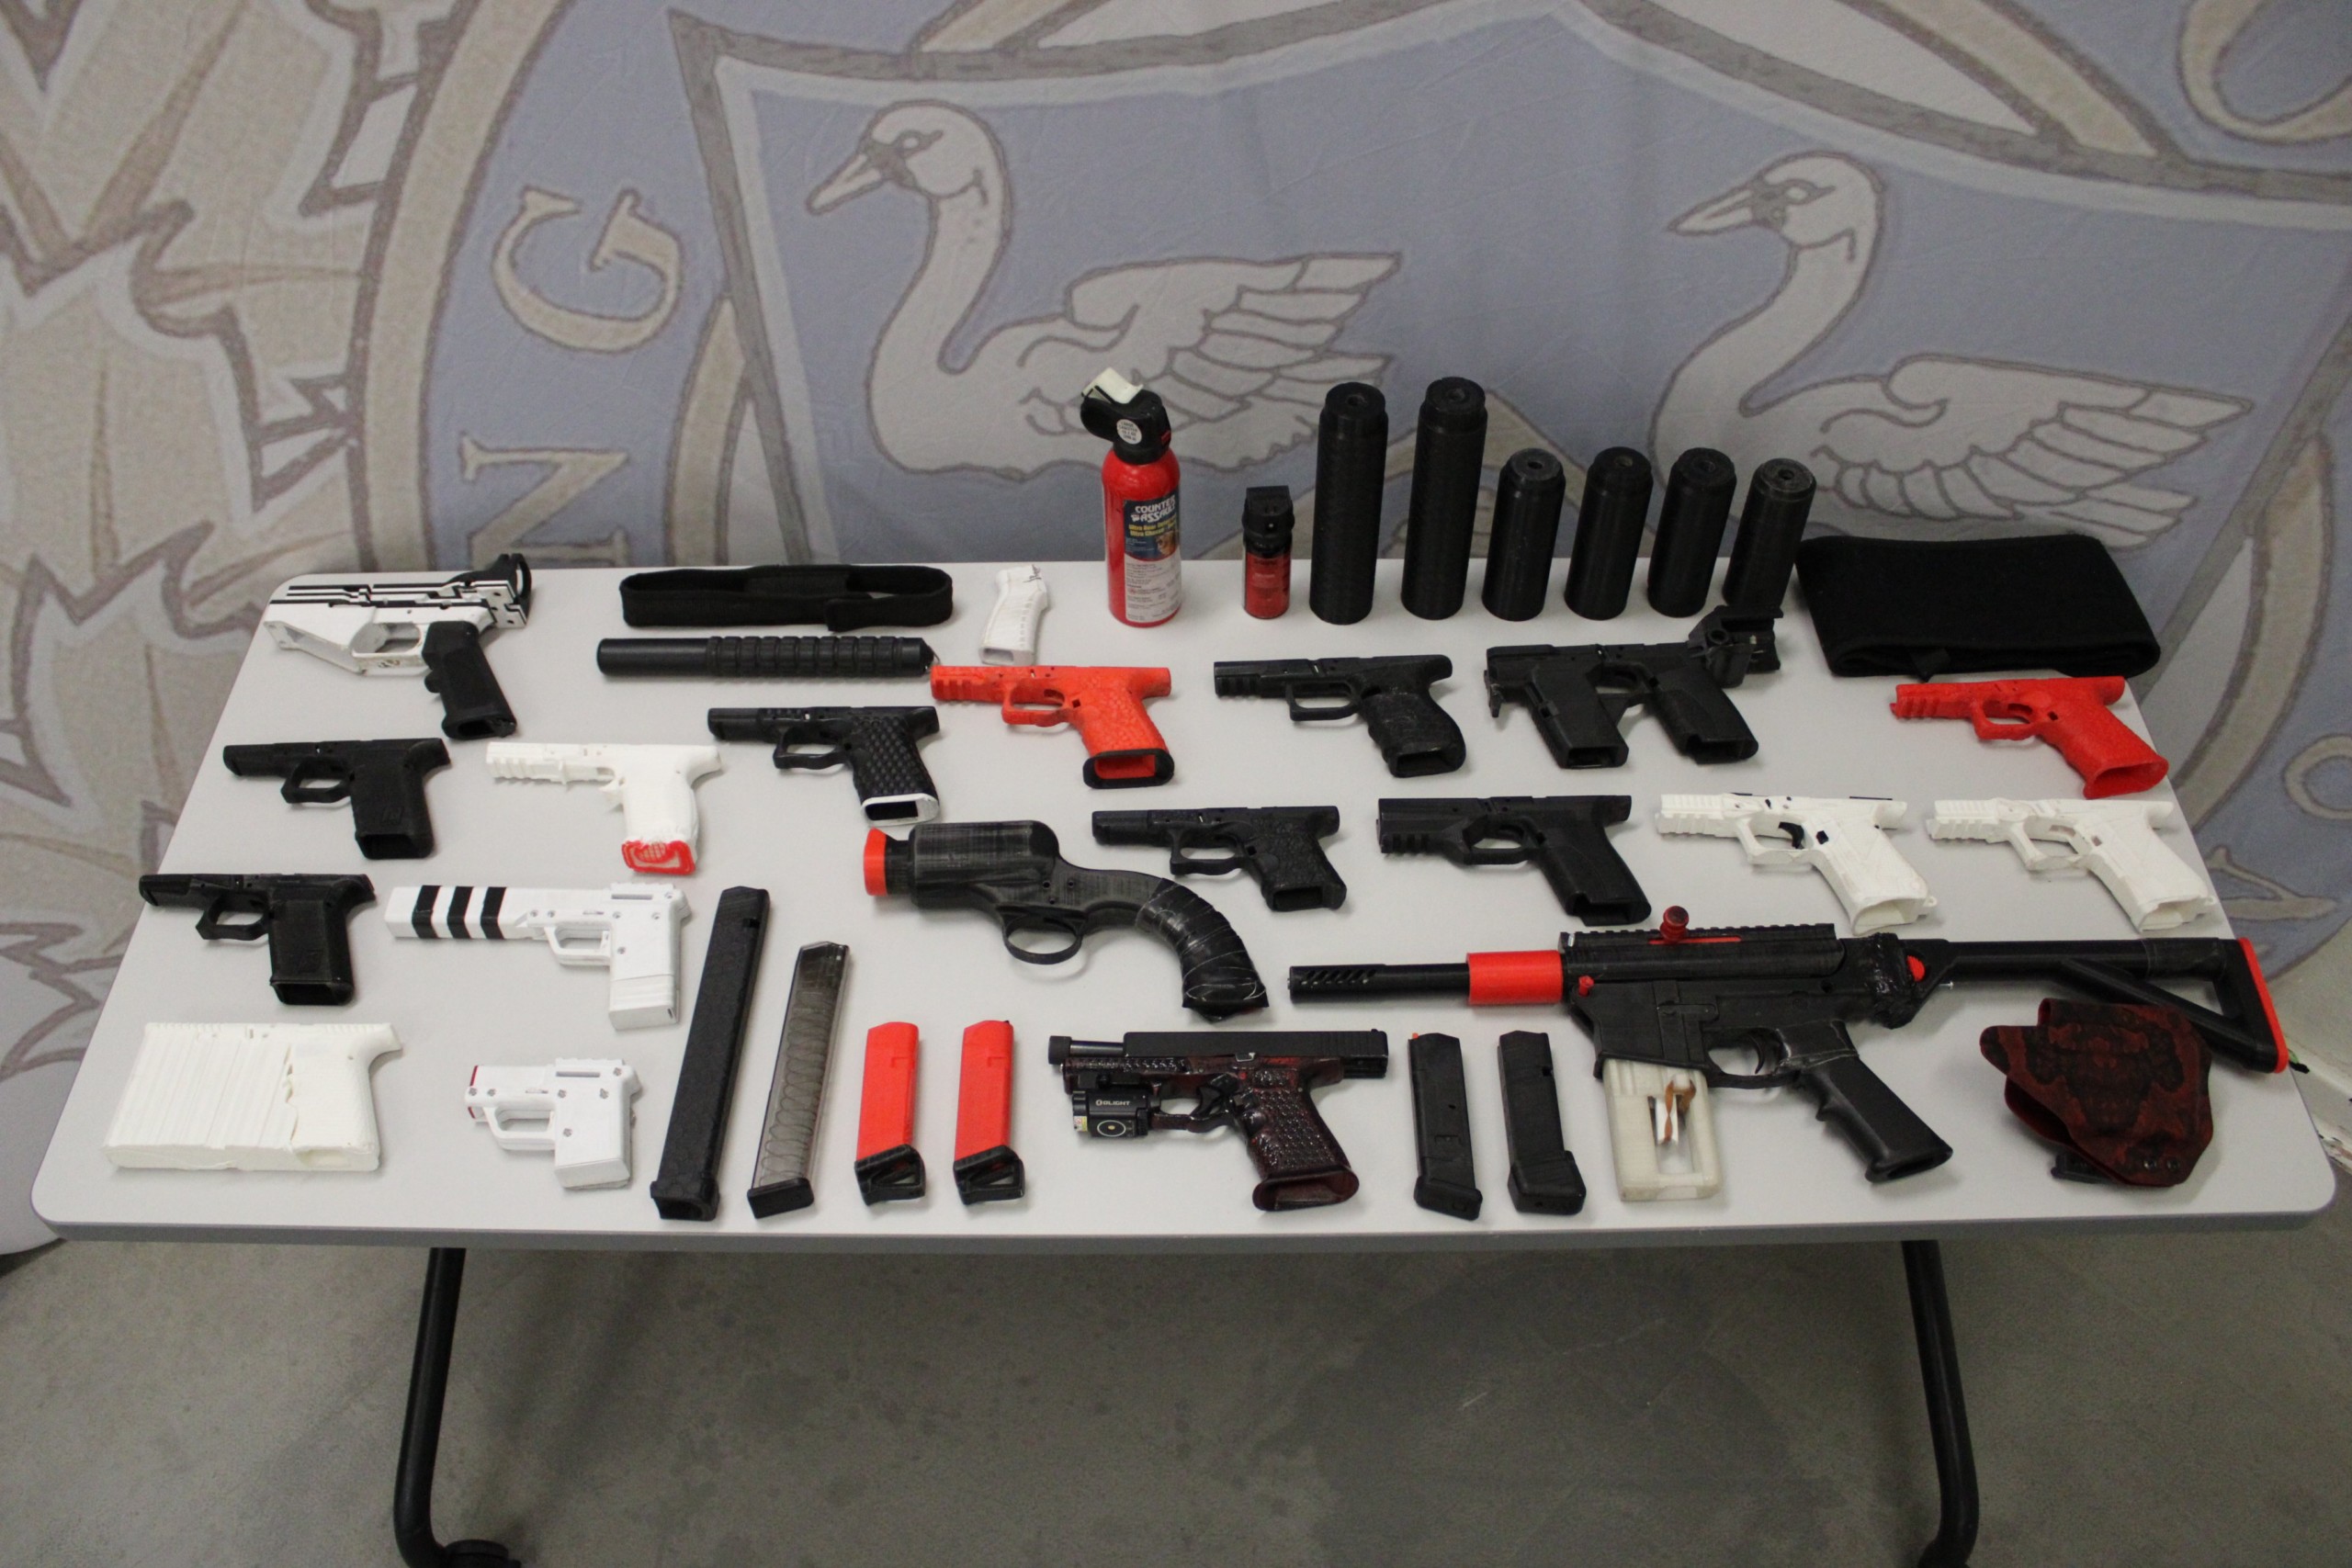 Stratford man accused of 3-D printing guns